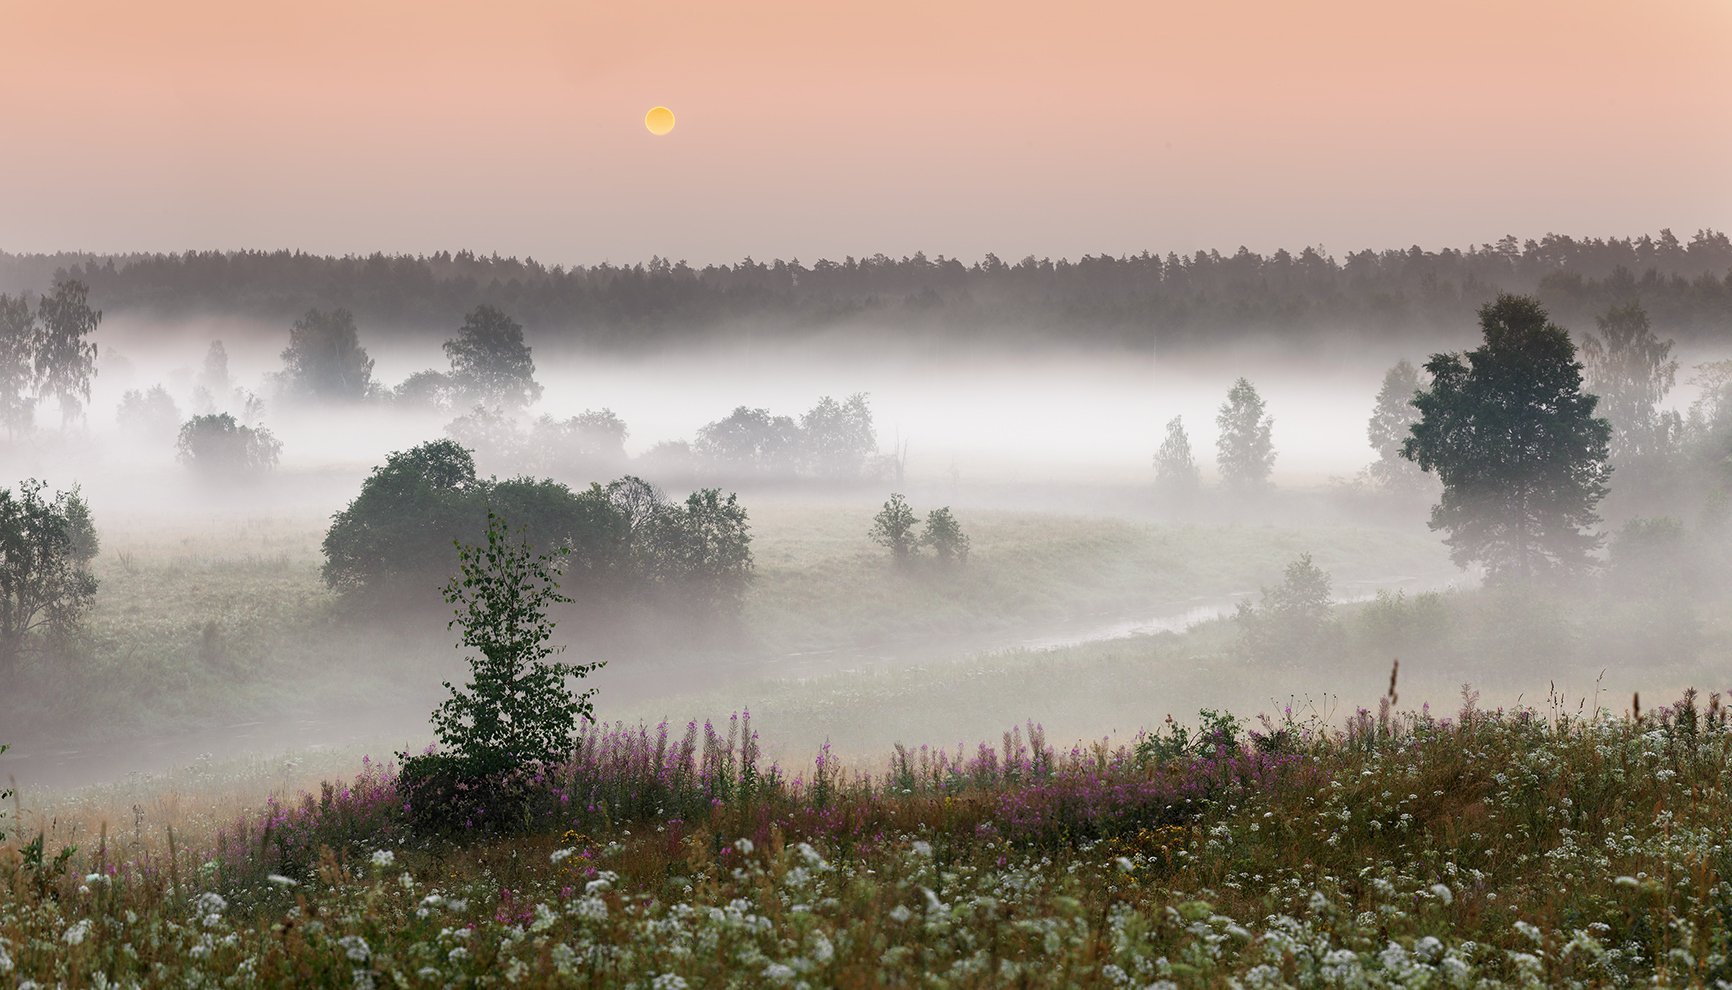 Пелена трава. Асафатов - туман. Кенозерский национальный парк рассвет туман. Рассветный туман на Каменке. Суздаль.. Туманное утро Фет.